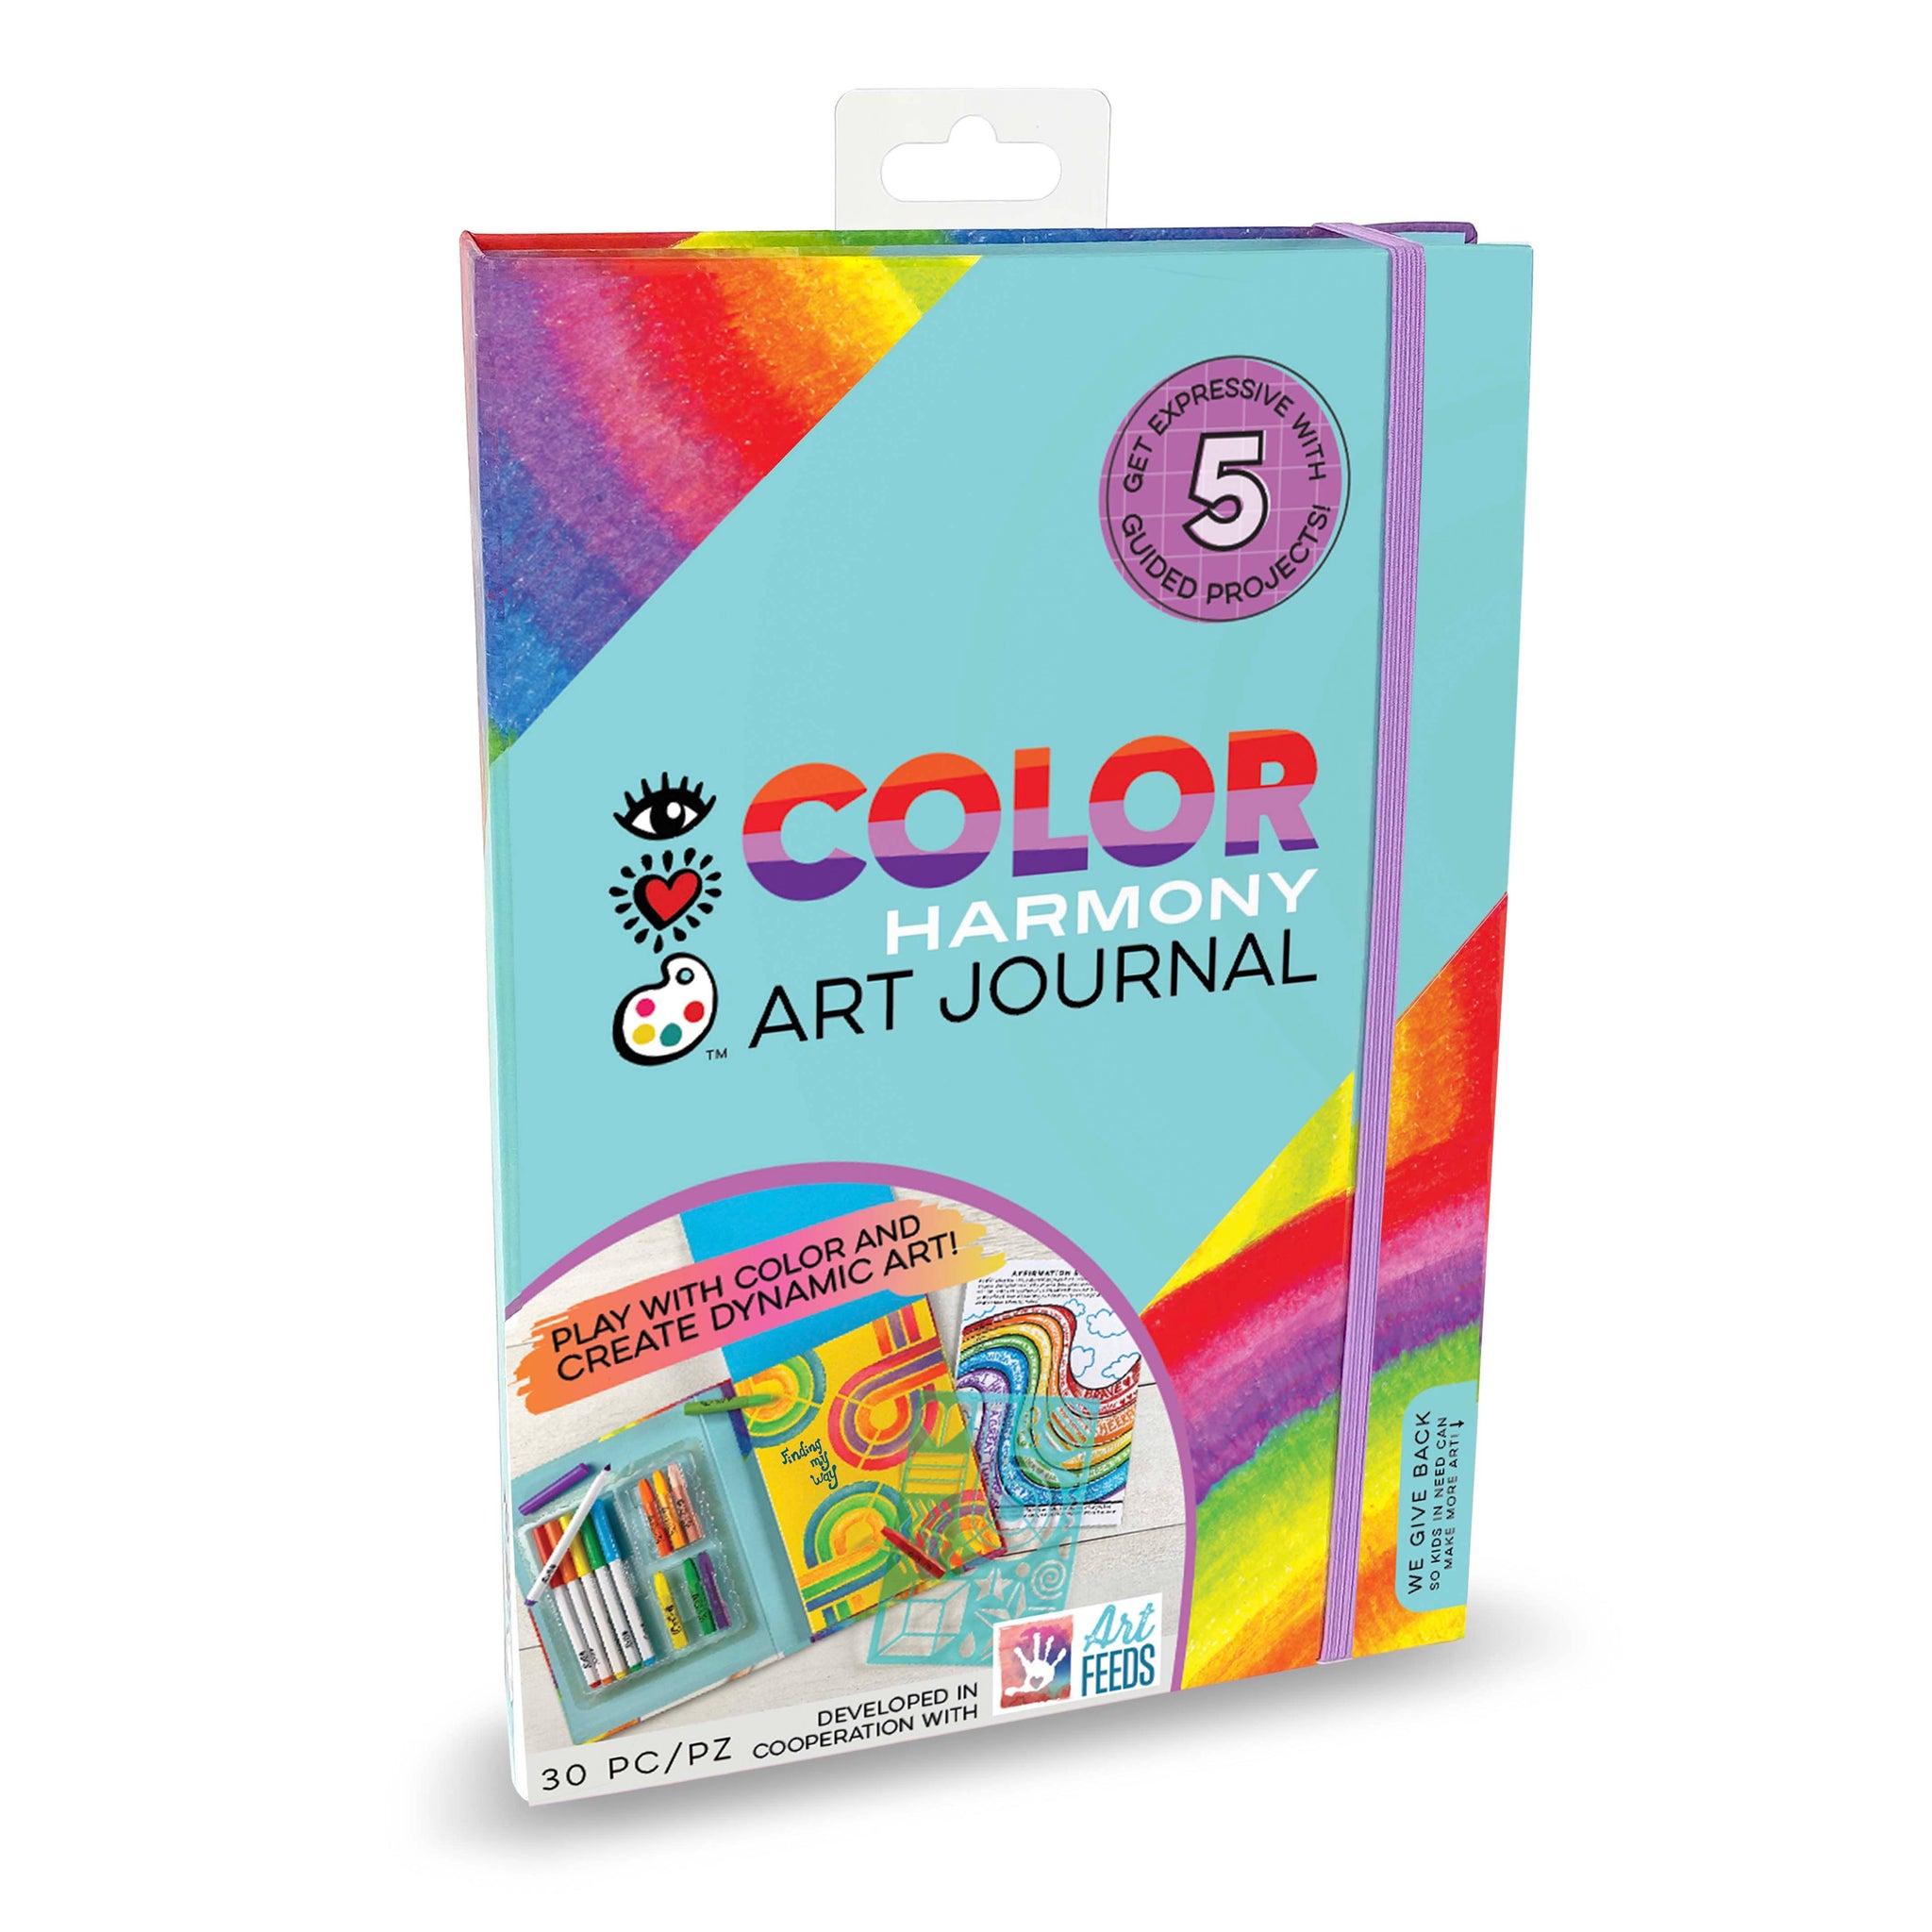 iHeartArt Art Journal - Color Harmony